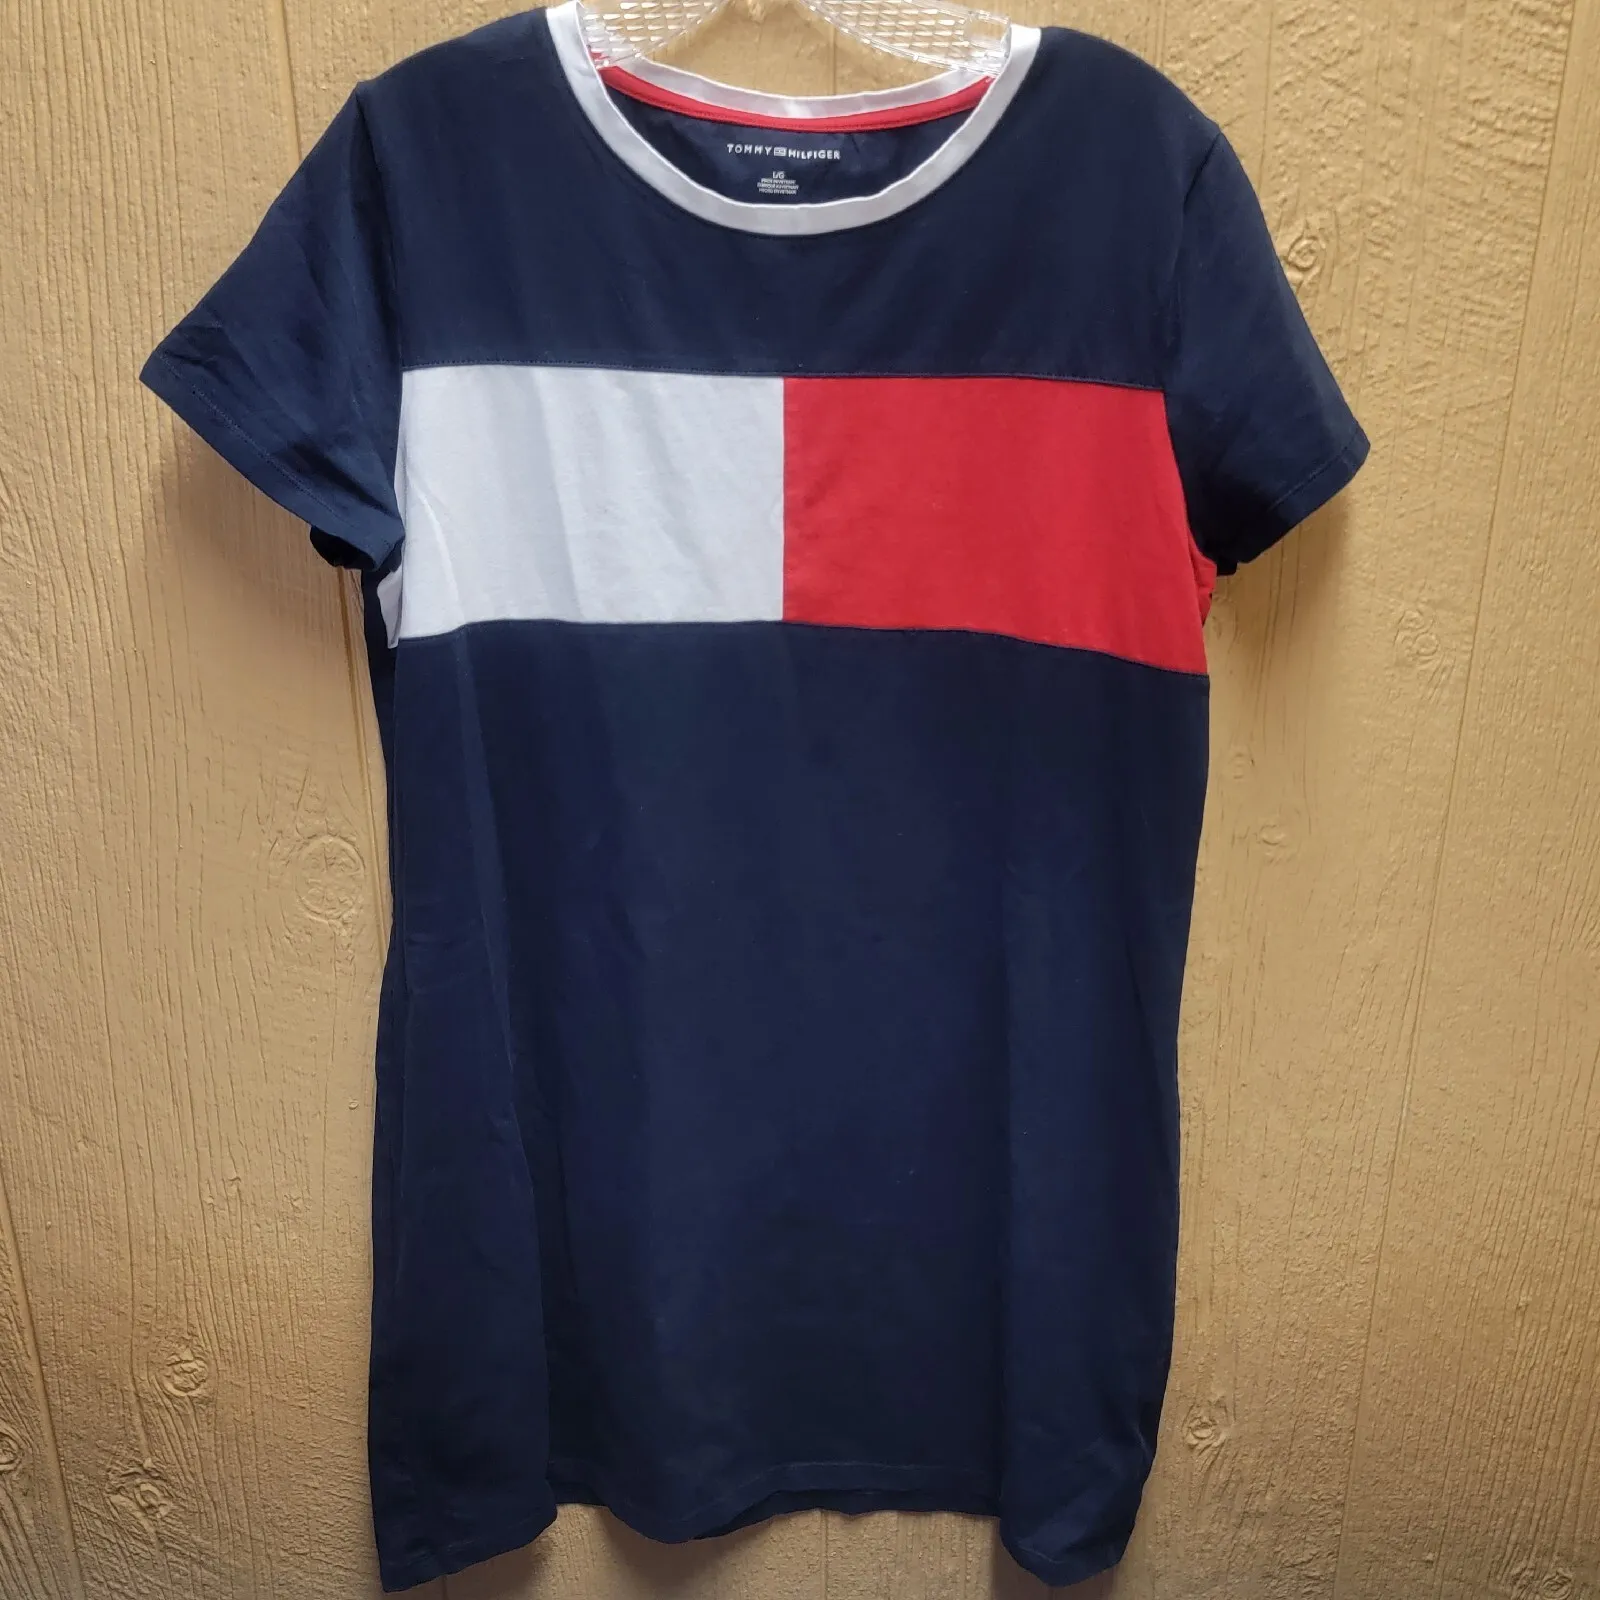 Tommy Hilfiger Women Shirt Dress Large Short Sleeve Red White Blue Stretch - $19.24